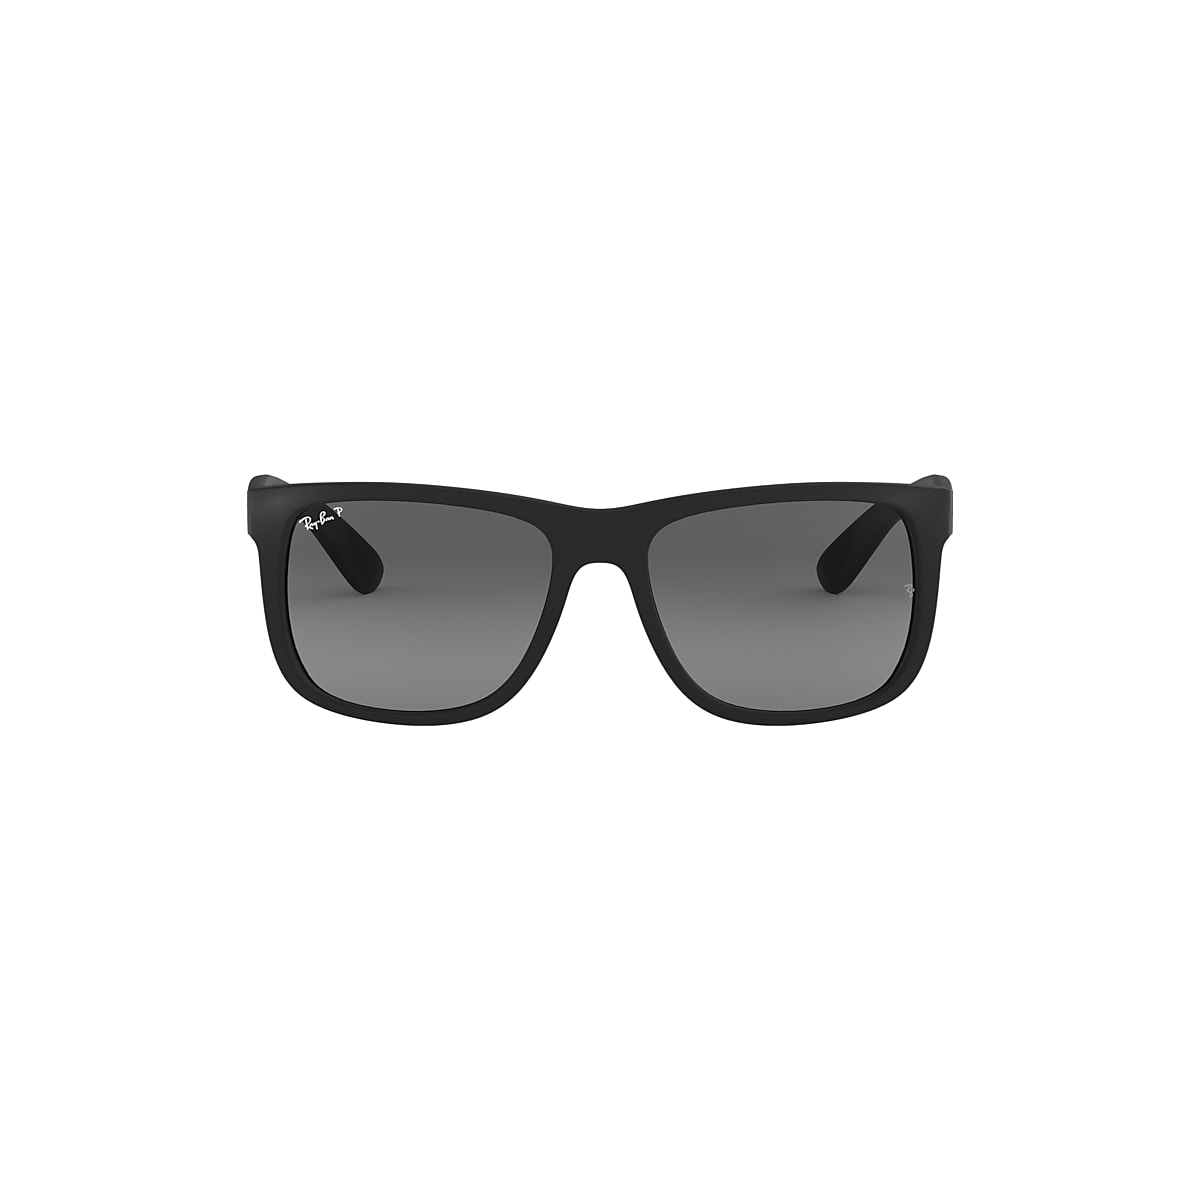 Ray-Ban RB4165 Justin 601/8G Sunglasses Matte Black